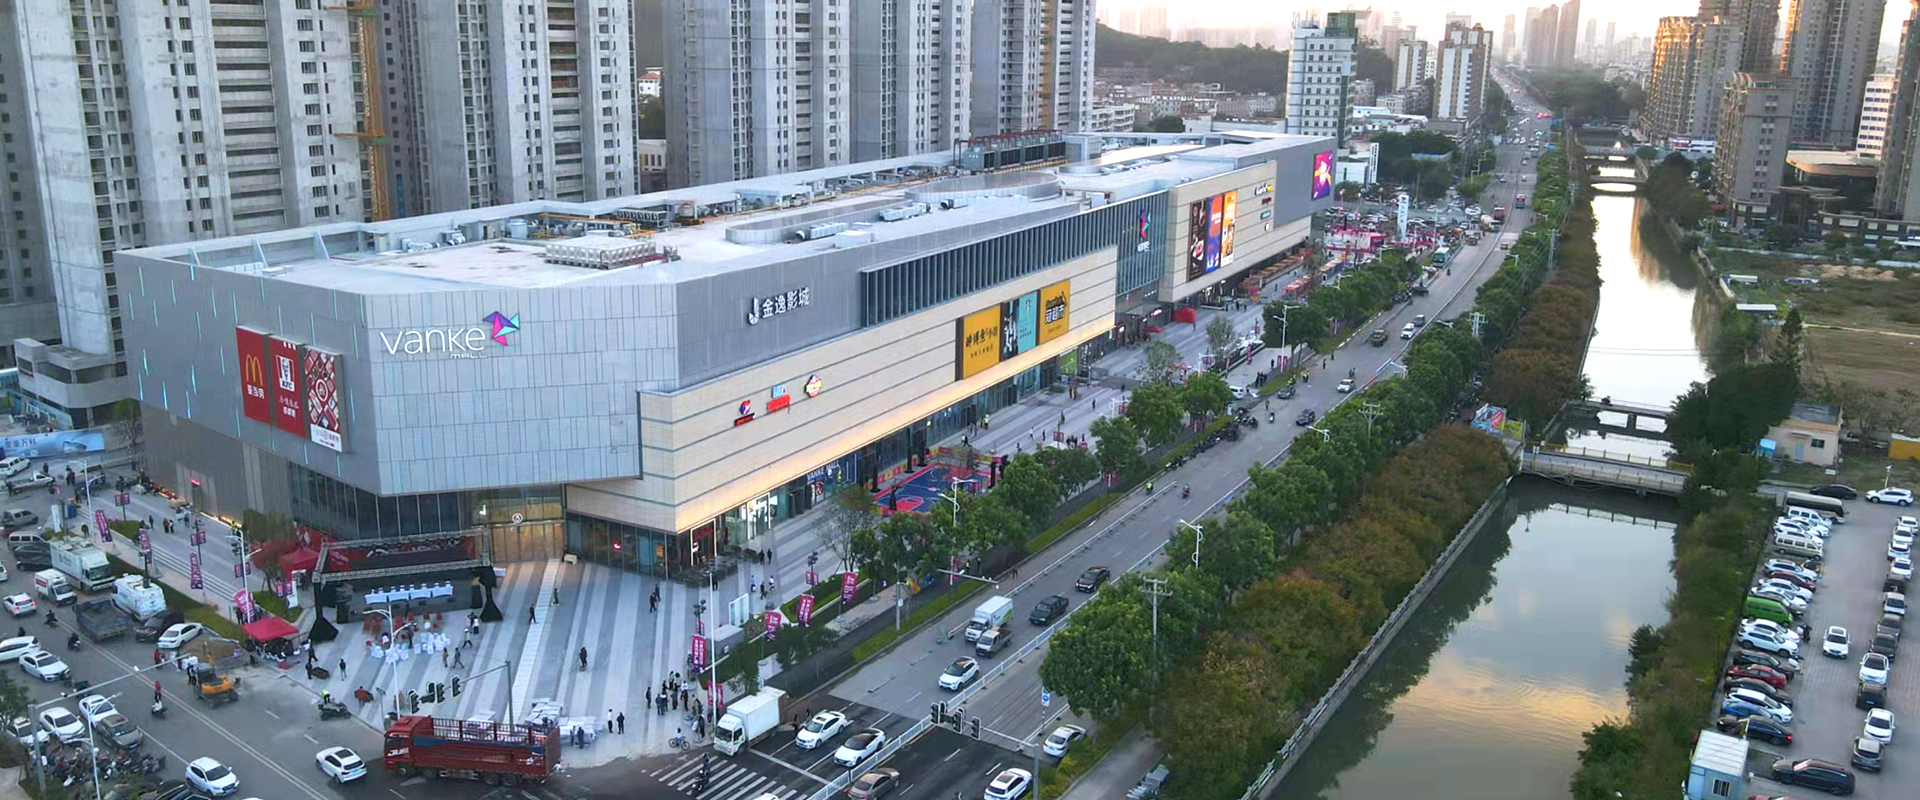 Longhai Plot 01 Shopping Mall